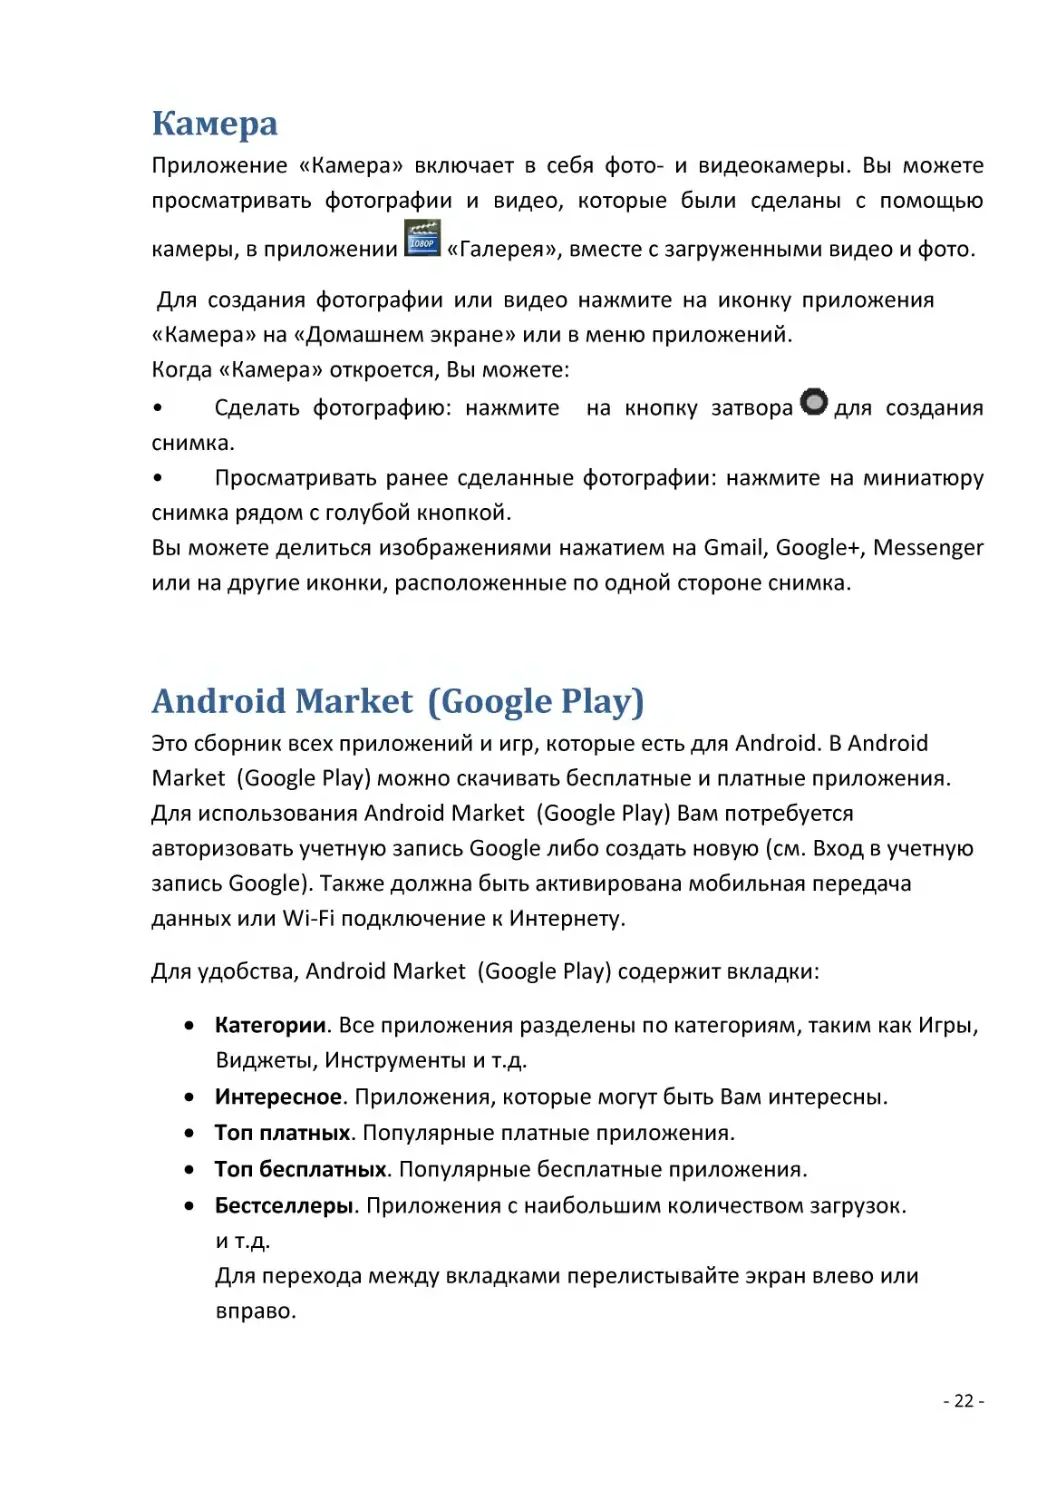 ﻿Камера
Android Market øGoogle Playù